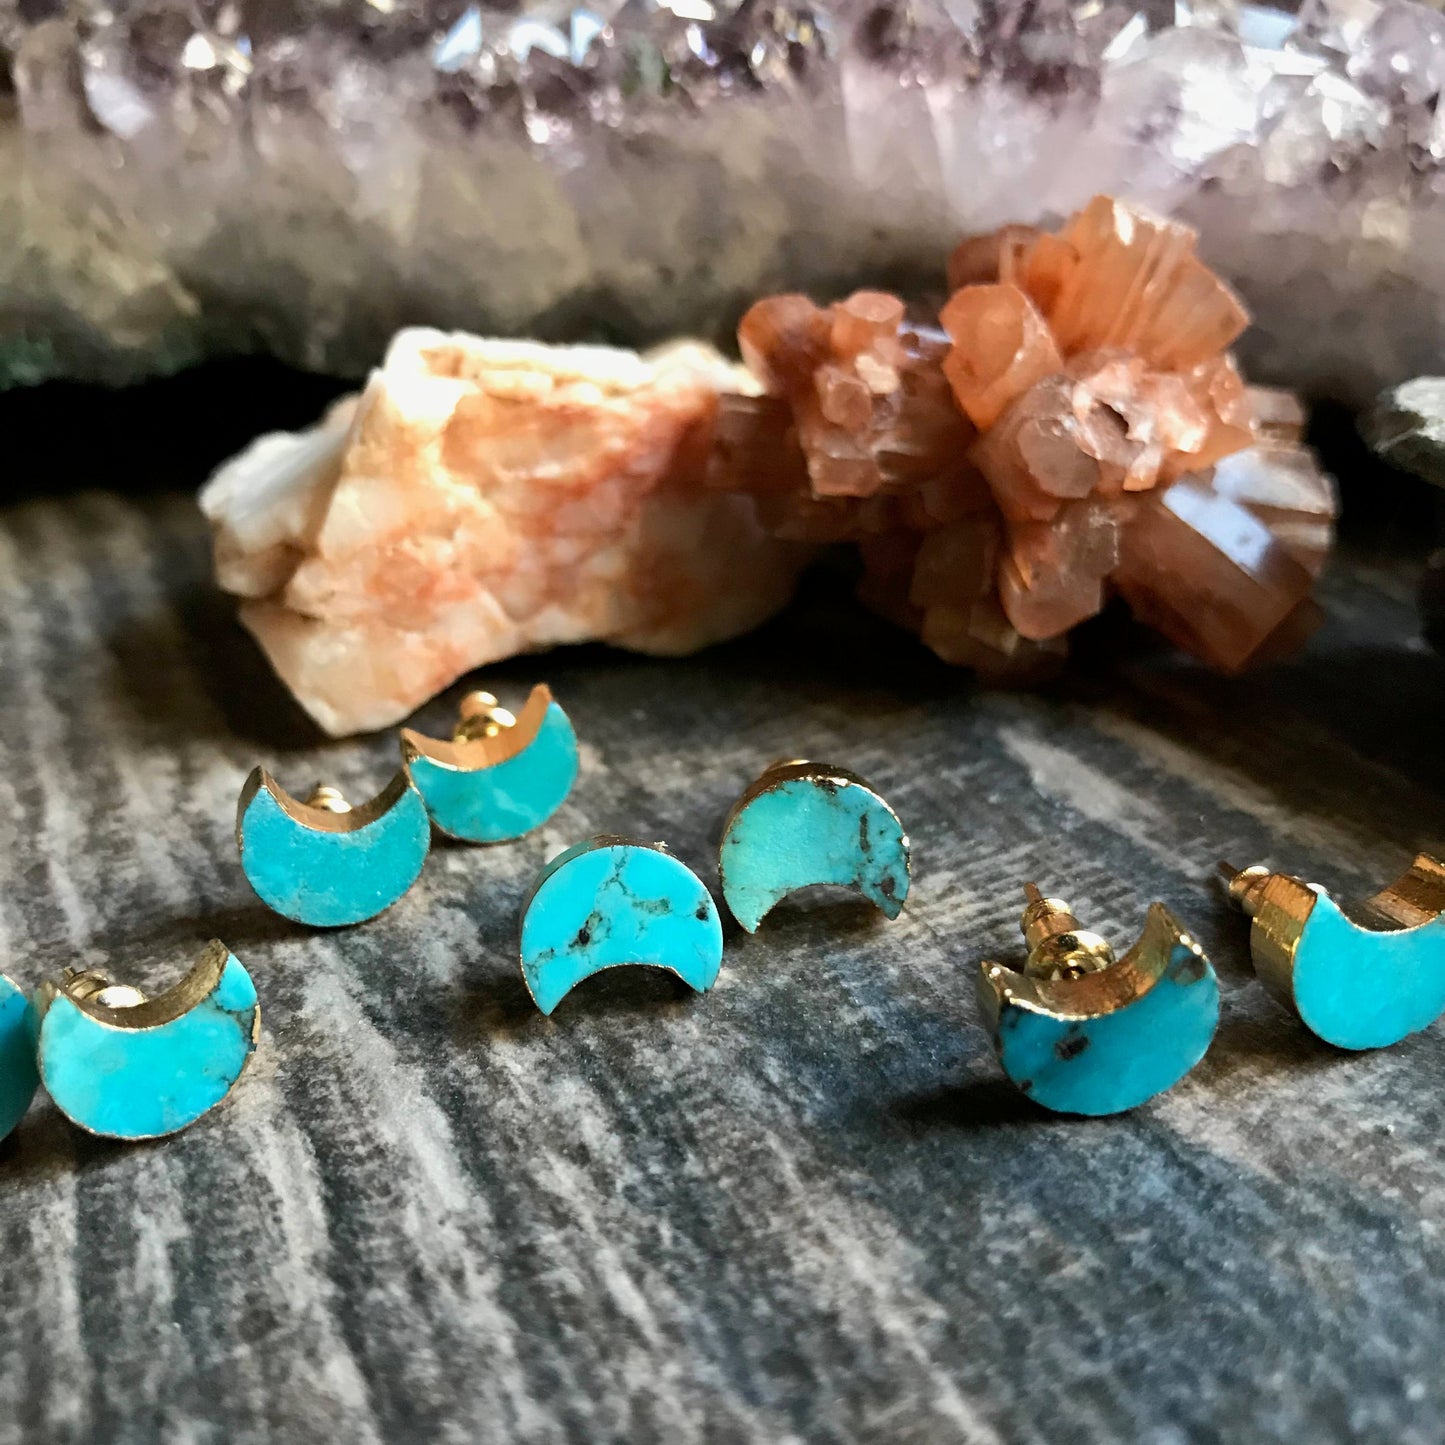 Turquoise Earrings, Turquoise Stud Earrings, Celestial Earrings, Crescent Moon Earrings, Turquoise Earrings Gold,Moon Stud Earrings